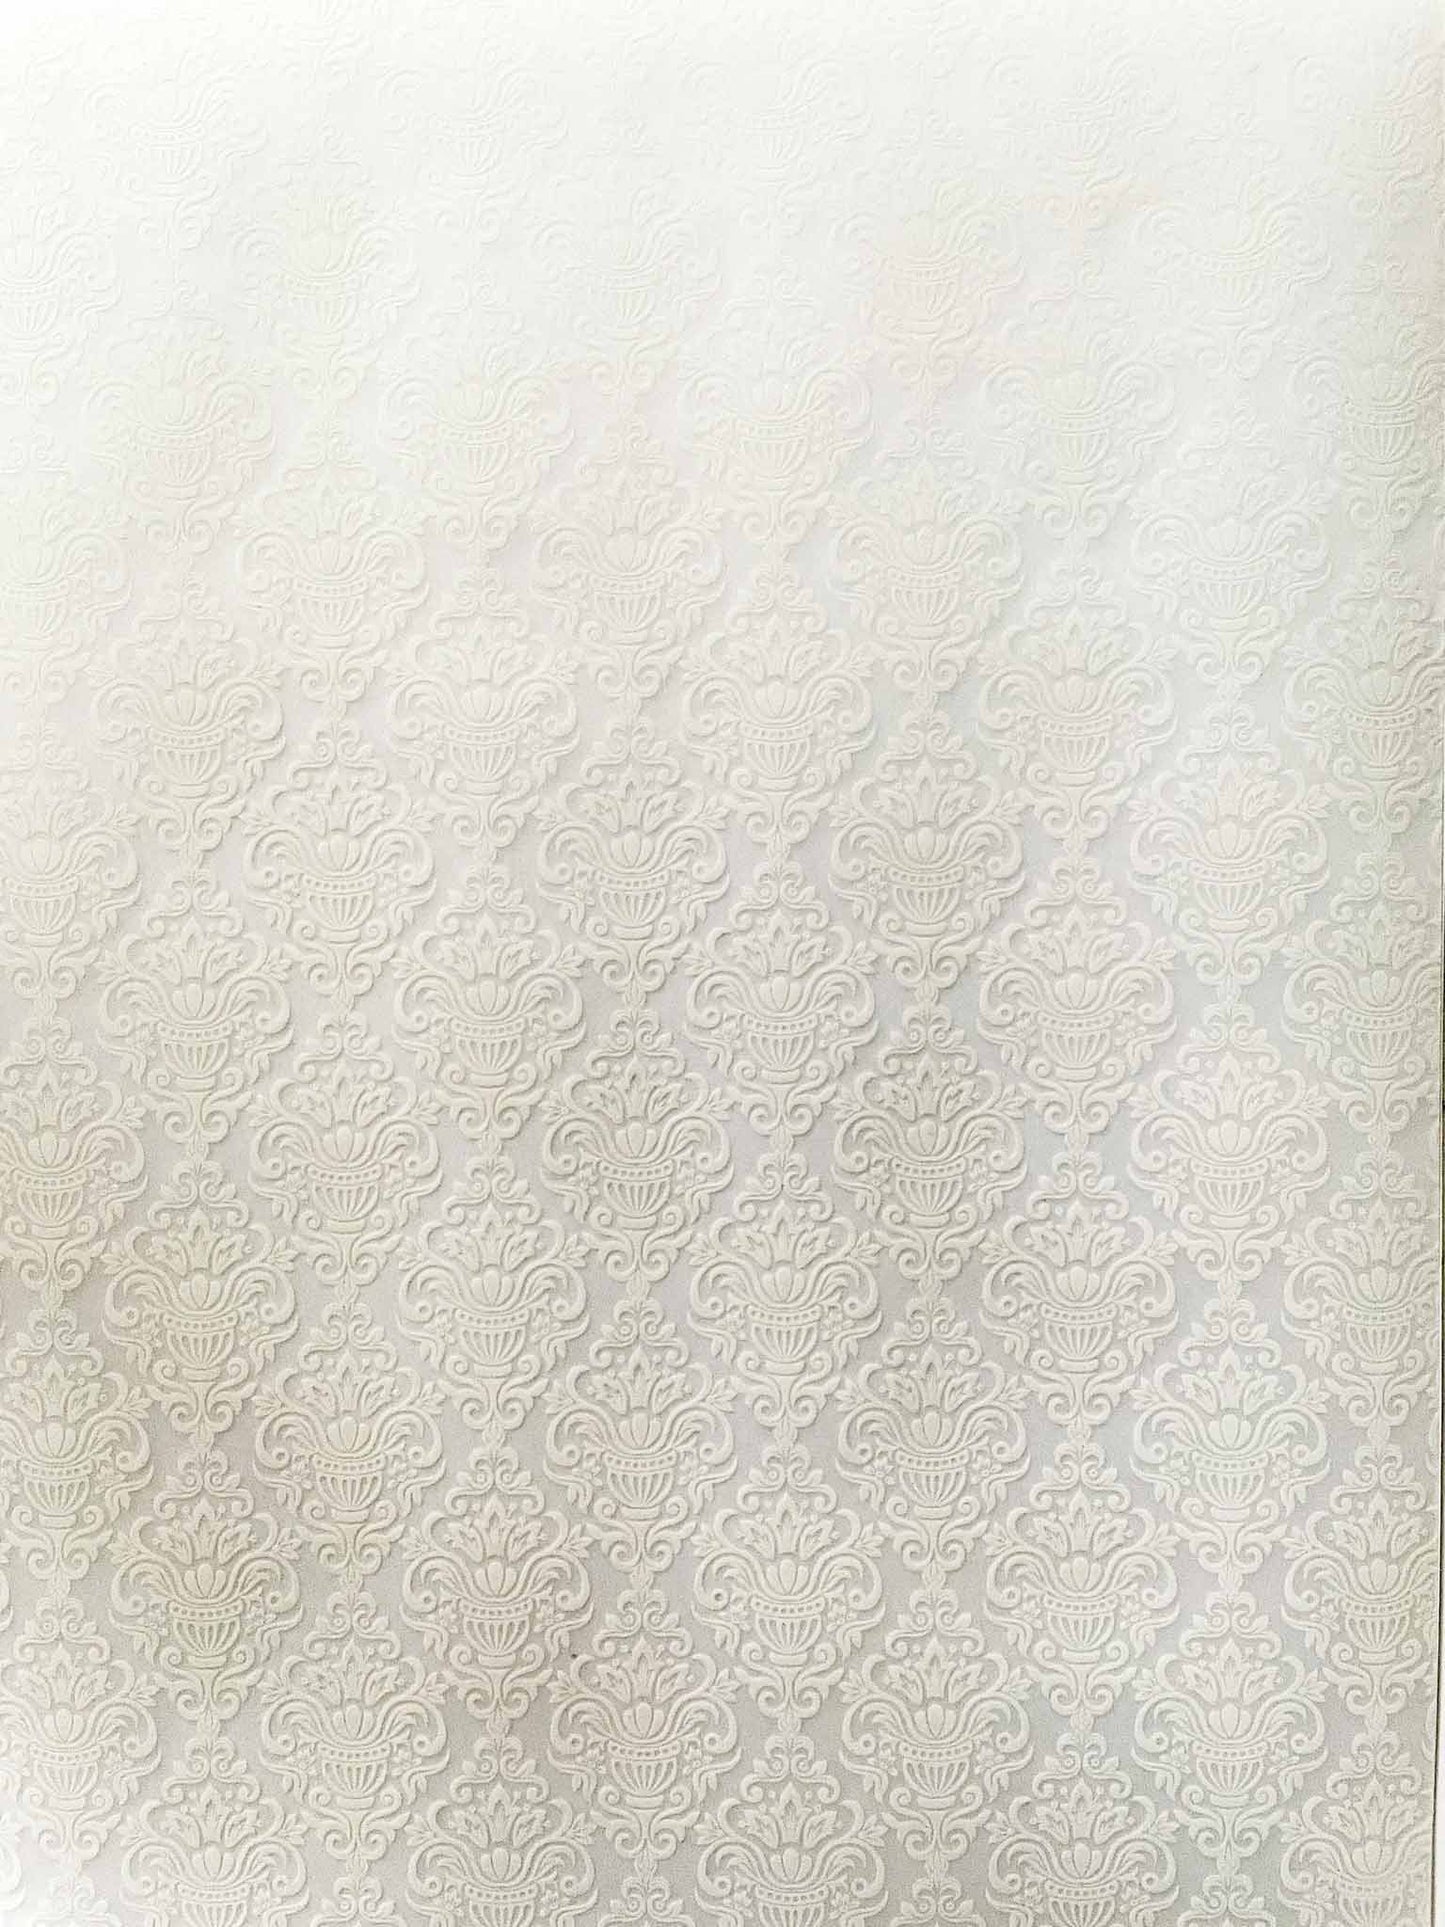 vellum-paper-with-vintage-damask-print